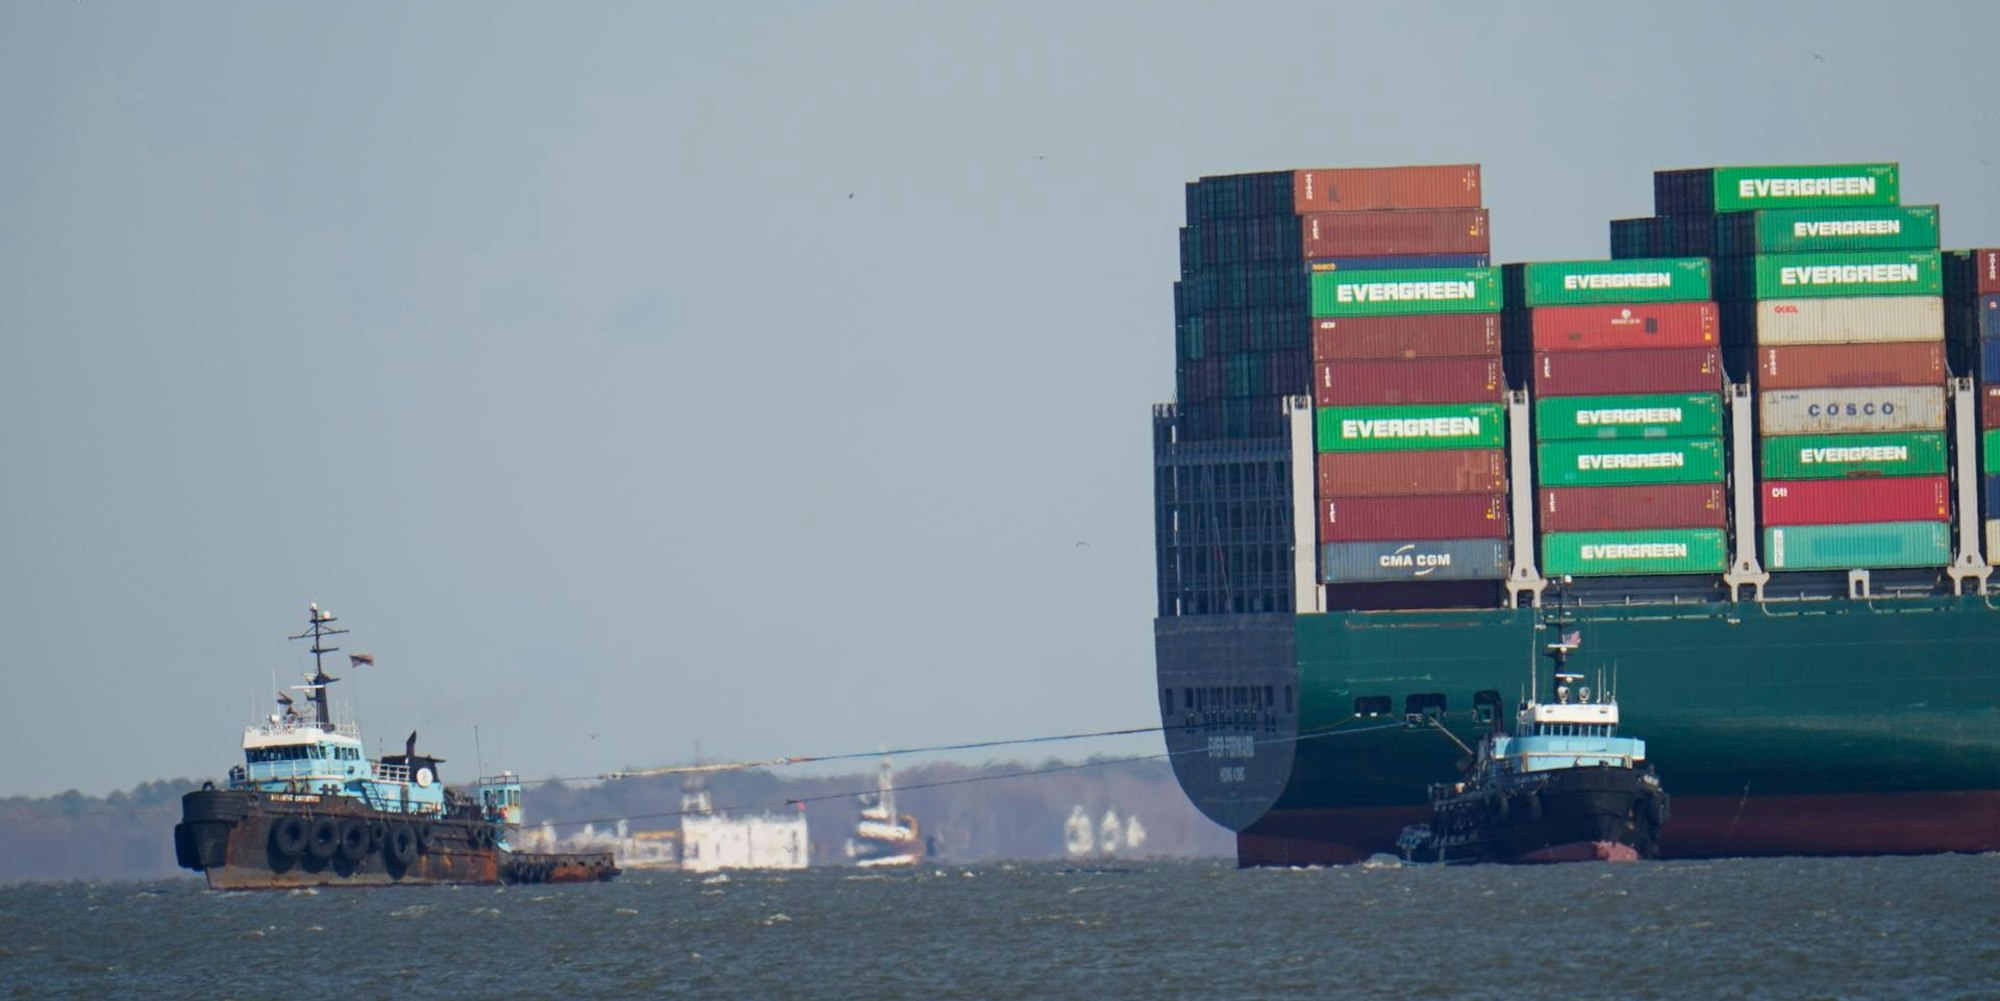 Containerschiff Symbold dpa